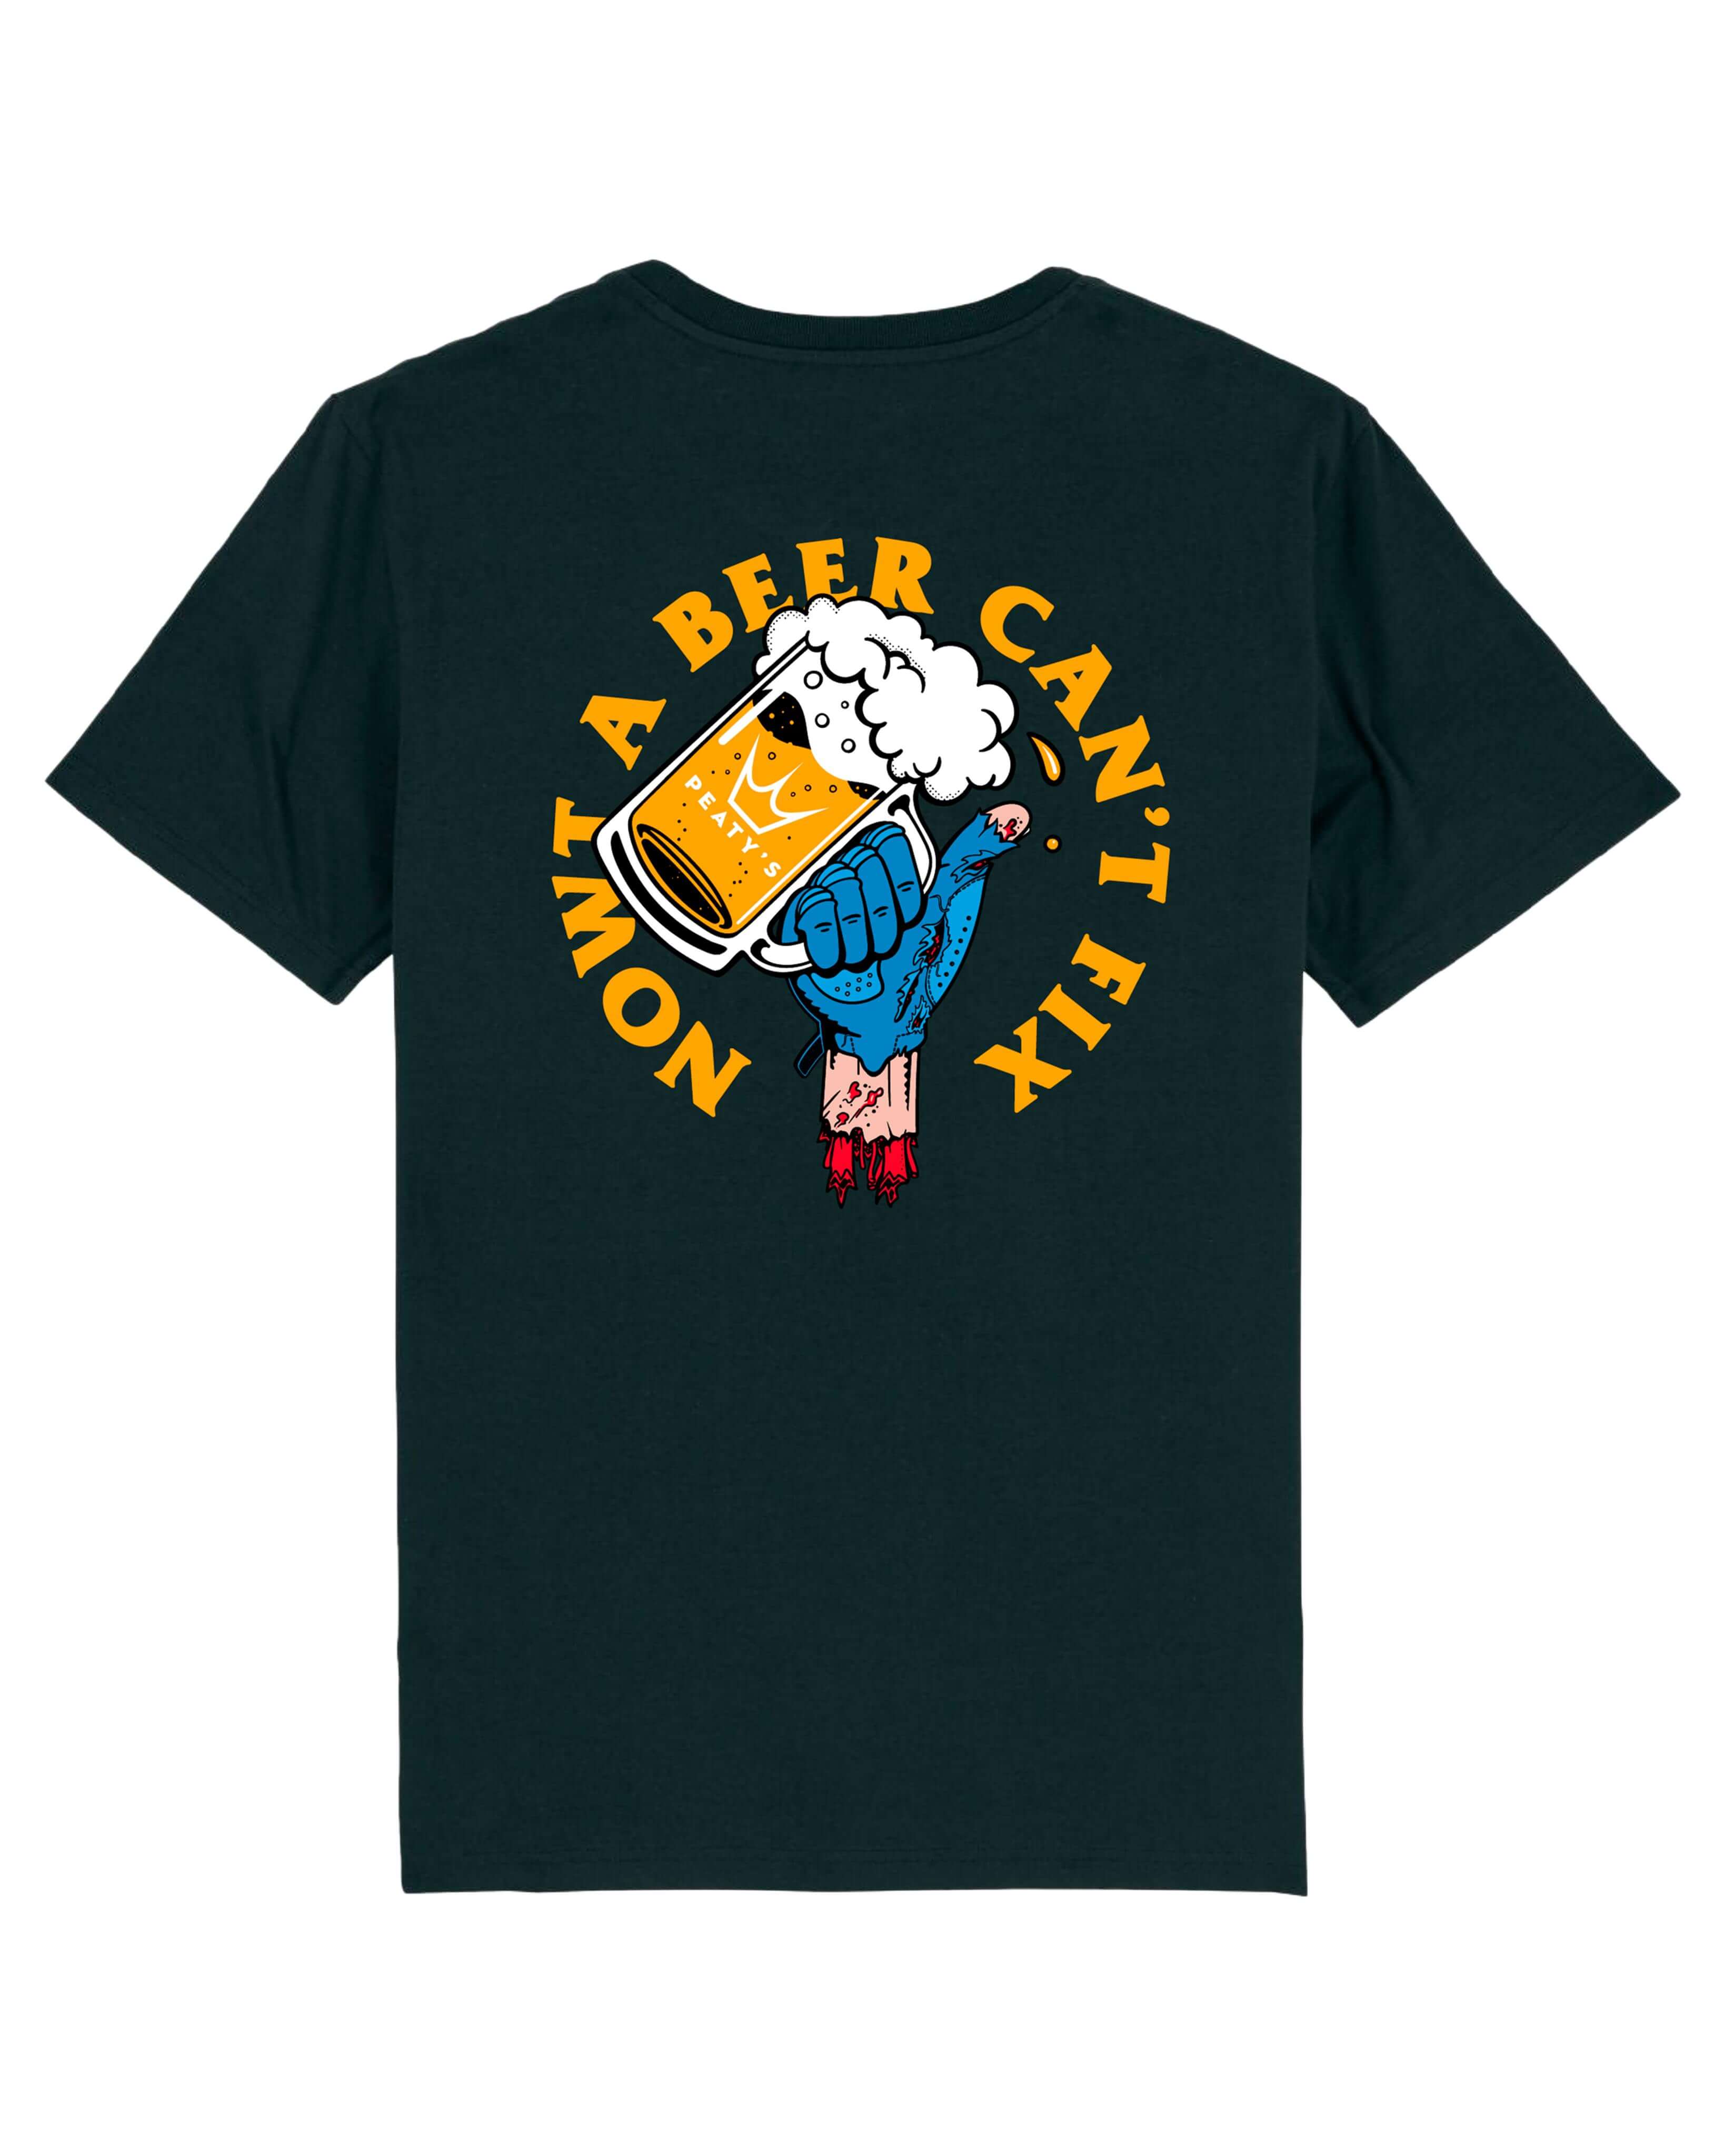 Pubwear T-Shirts - Nowt A Beer Can_t Fix - Black Back.jpg